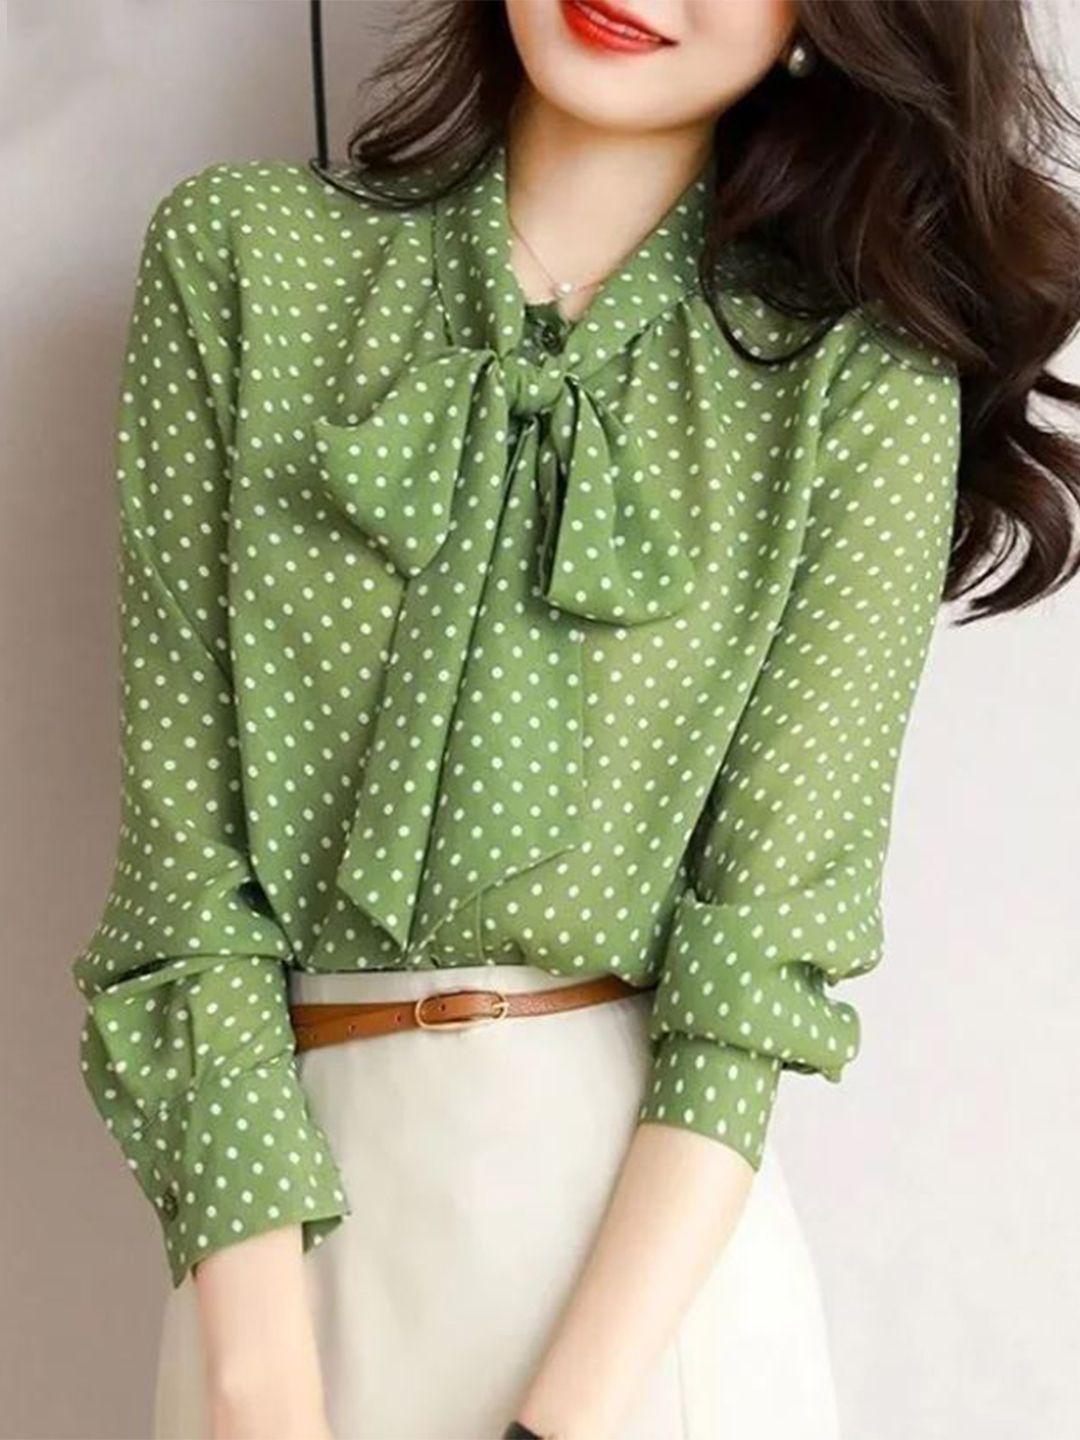 la aimee gorgeous green geometric top